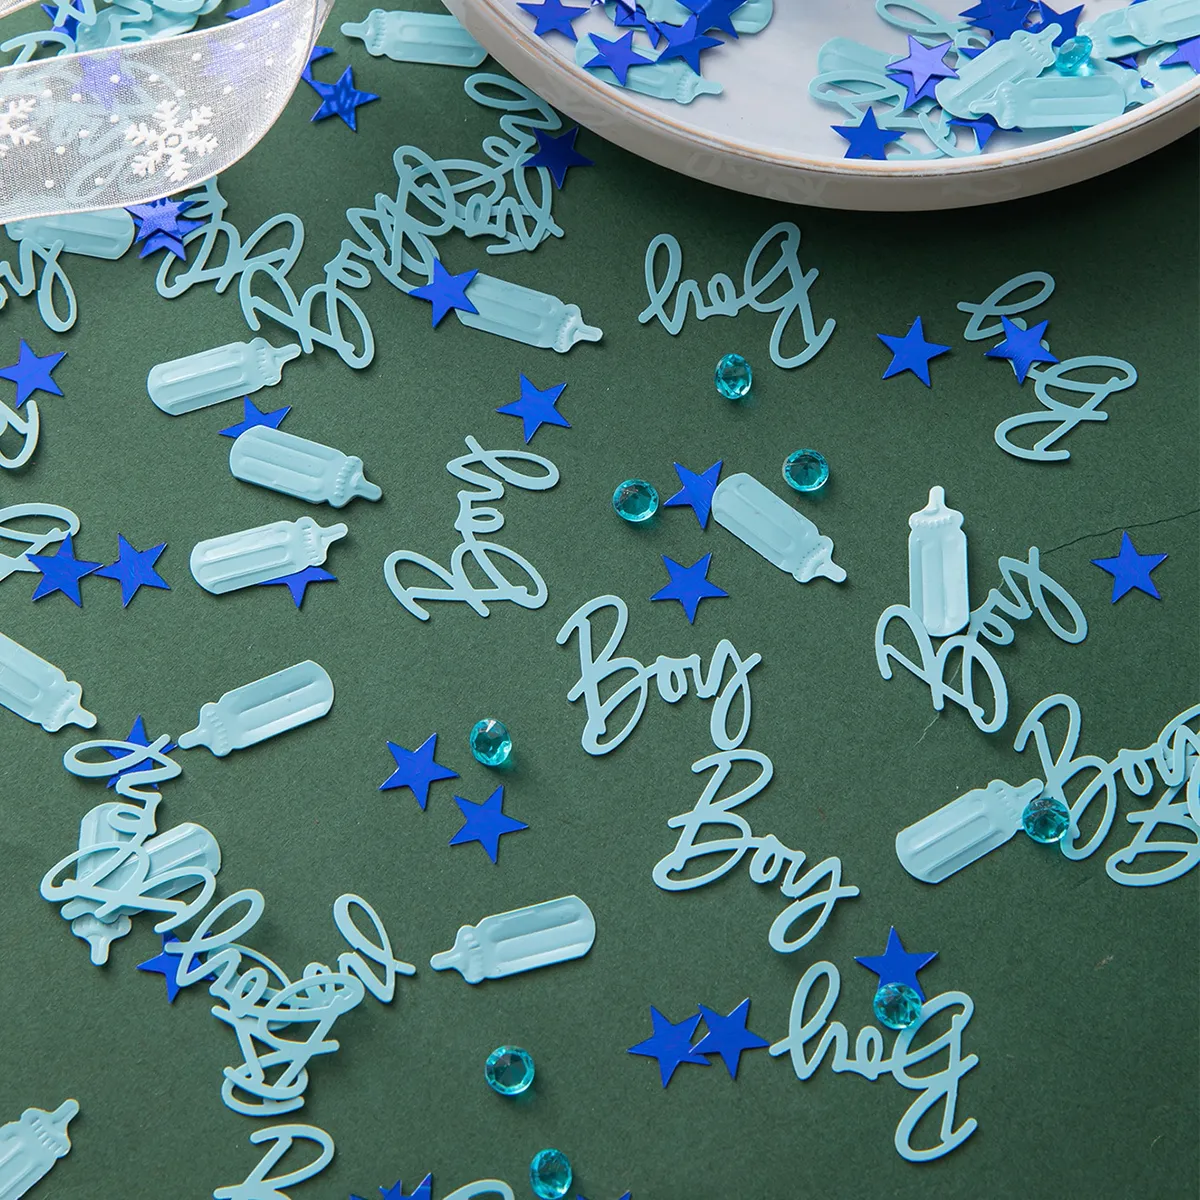 15g Confetti Baby Shower Decoration Letters, Feeding Bottle, Pentagram, Diamond Party Wedding Tabletop Paper Scraps